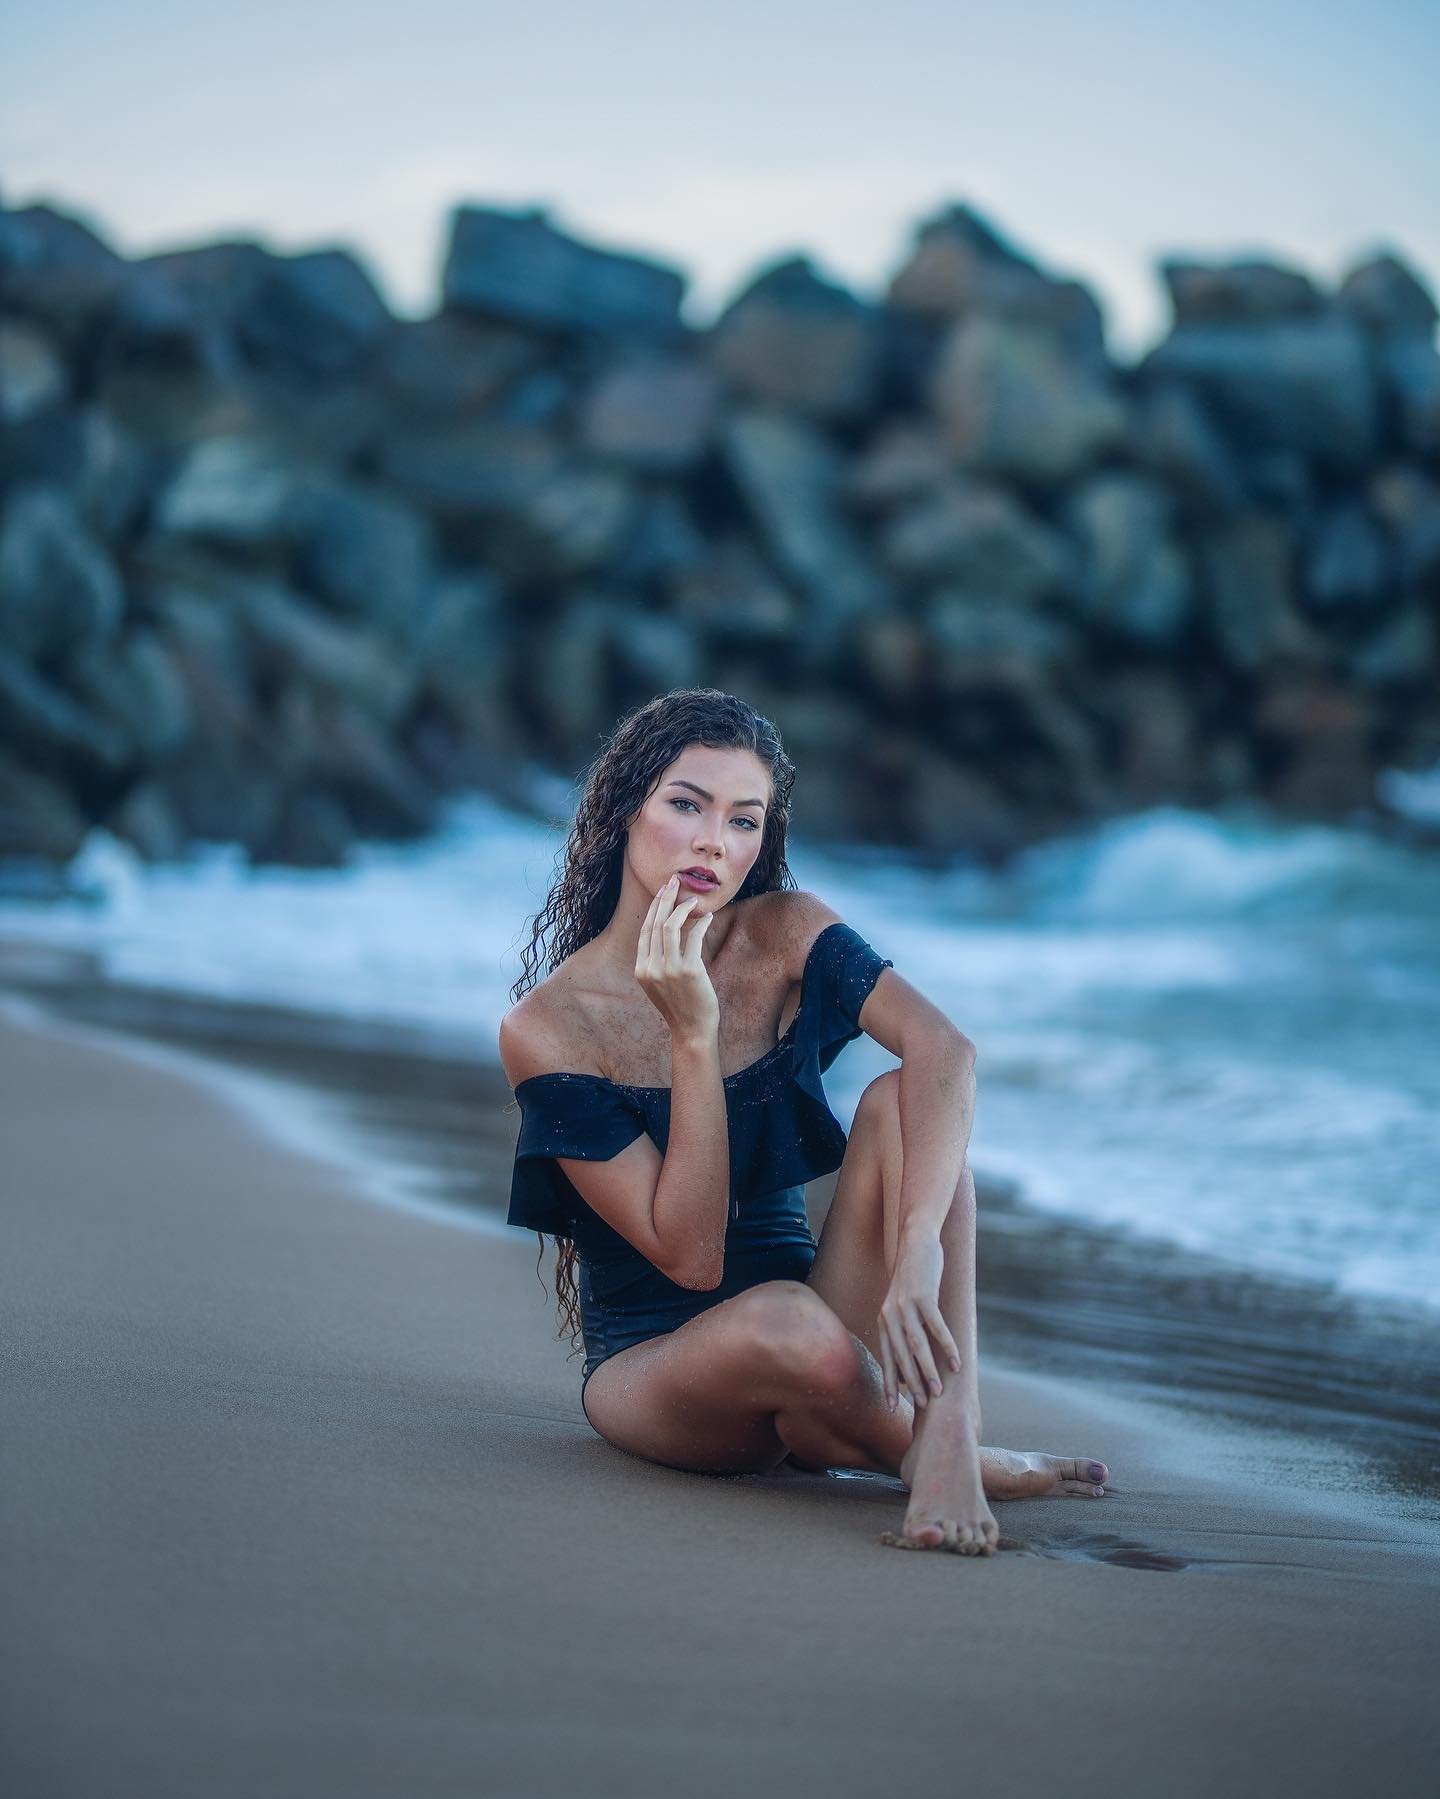 Modelo na praia em plano geral de fotografia by Yelle Nepumoceno